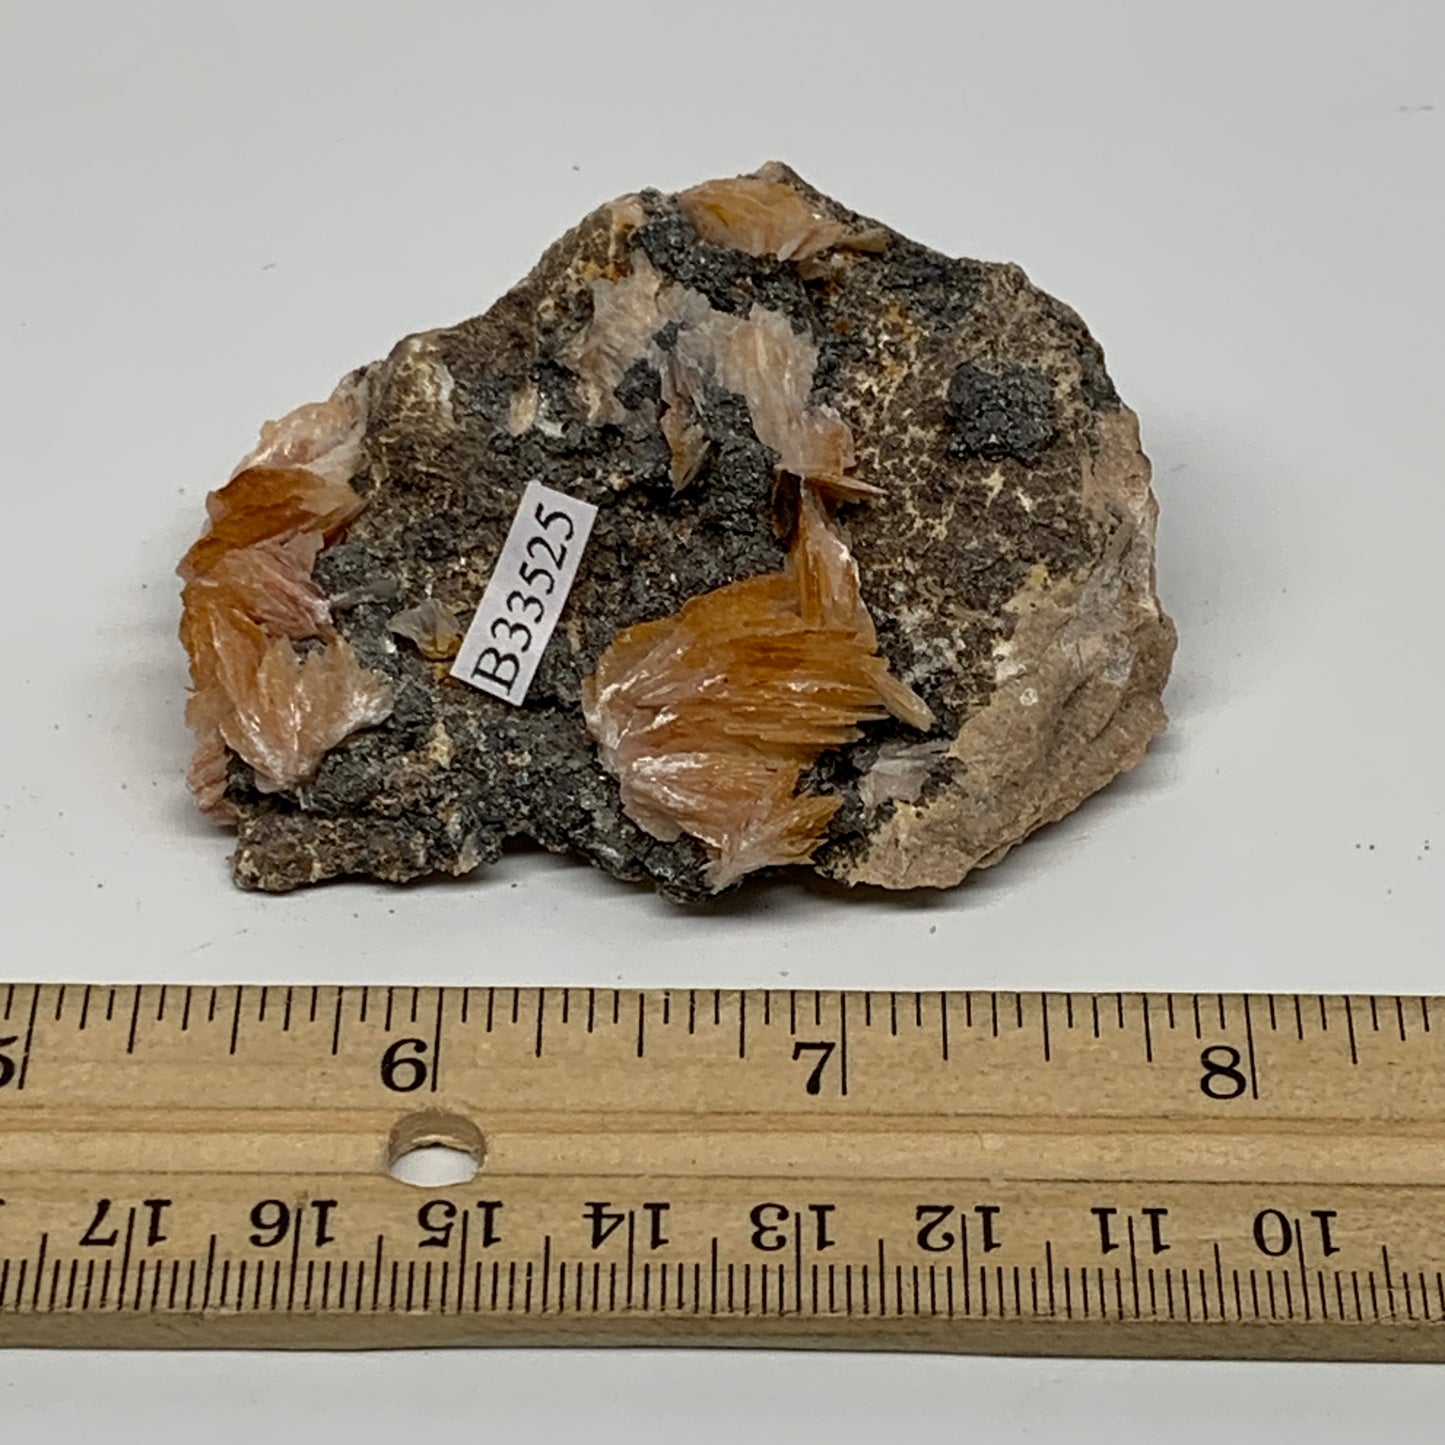 108.4g, 2.6"x2.1"x1.2", Barite with Cerussite on Galena Mineral Specimen, B33525